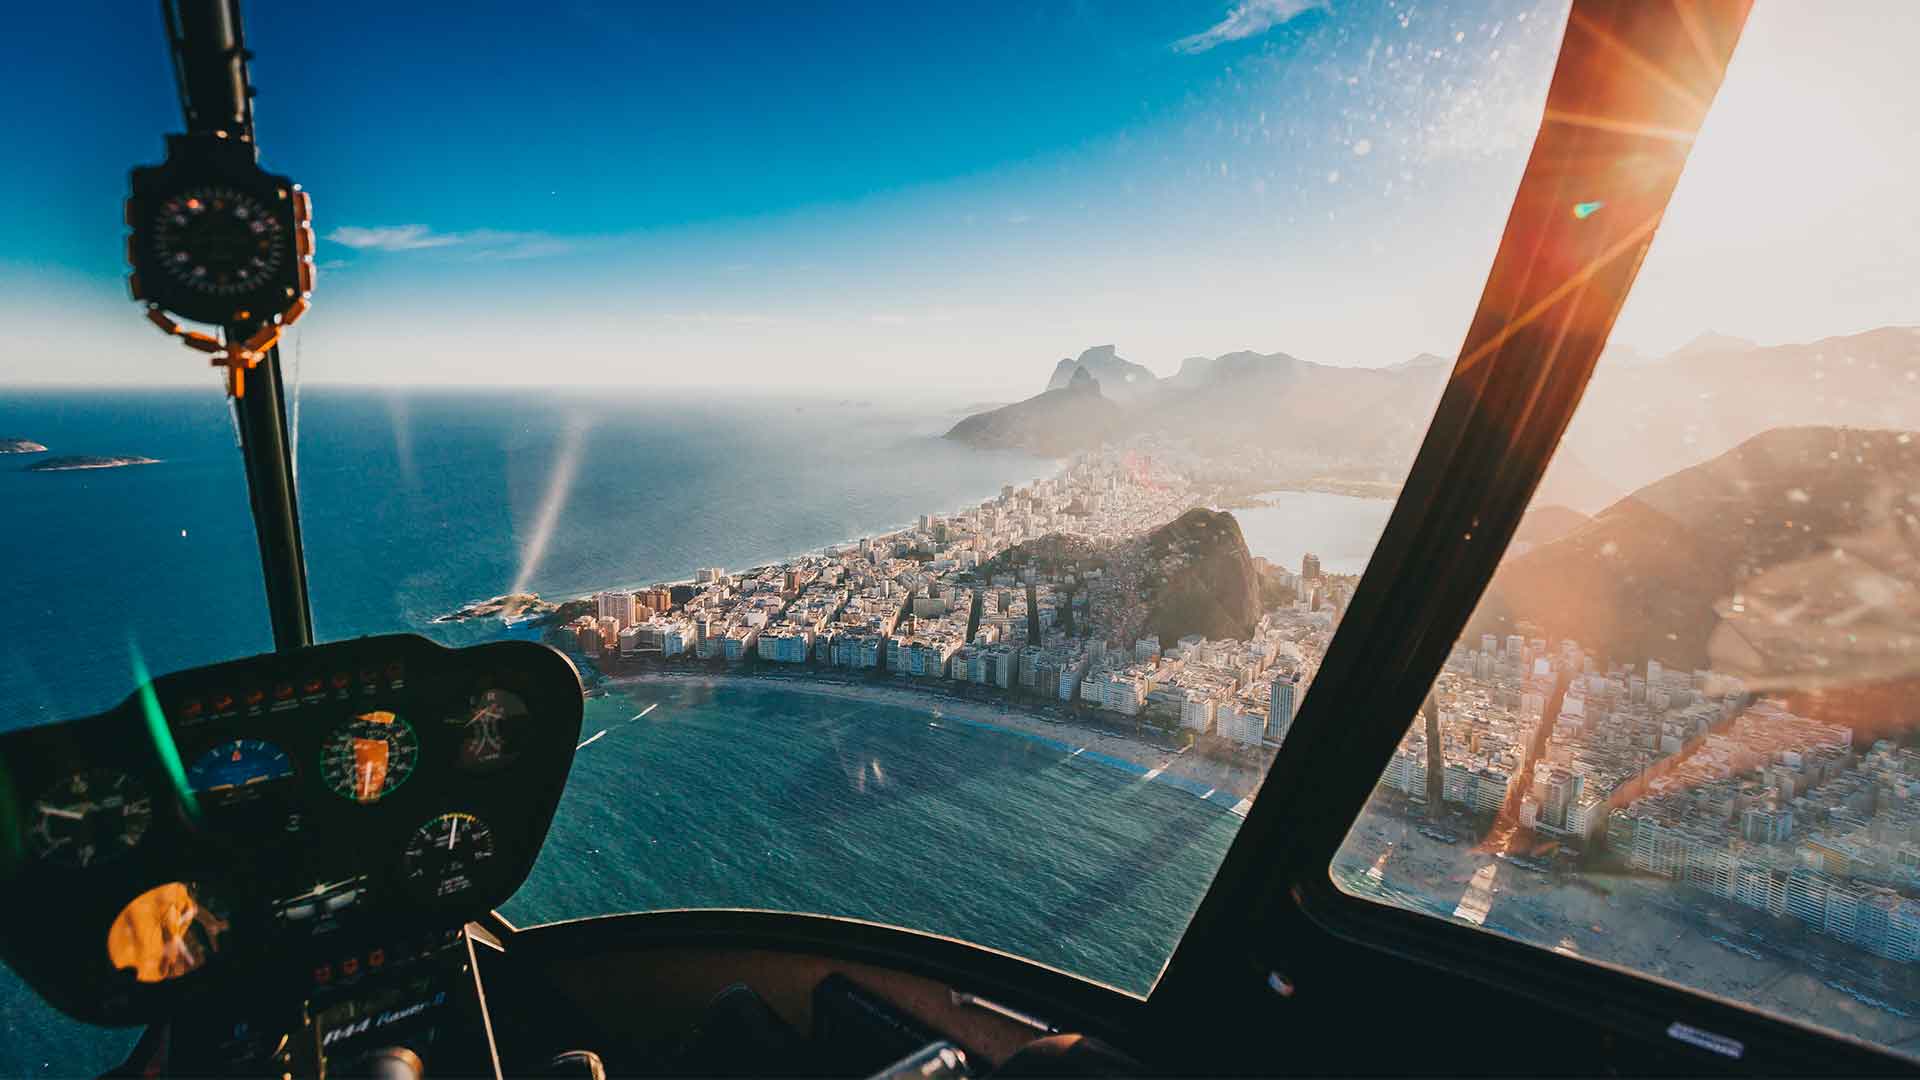 Slide Passeio de Helicóptero no Rio de Janeiro - Slide 03 - 4Fly RJ